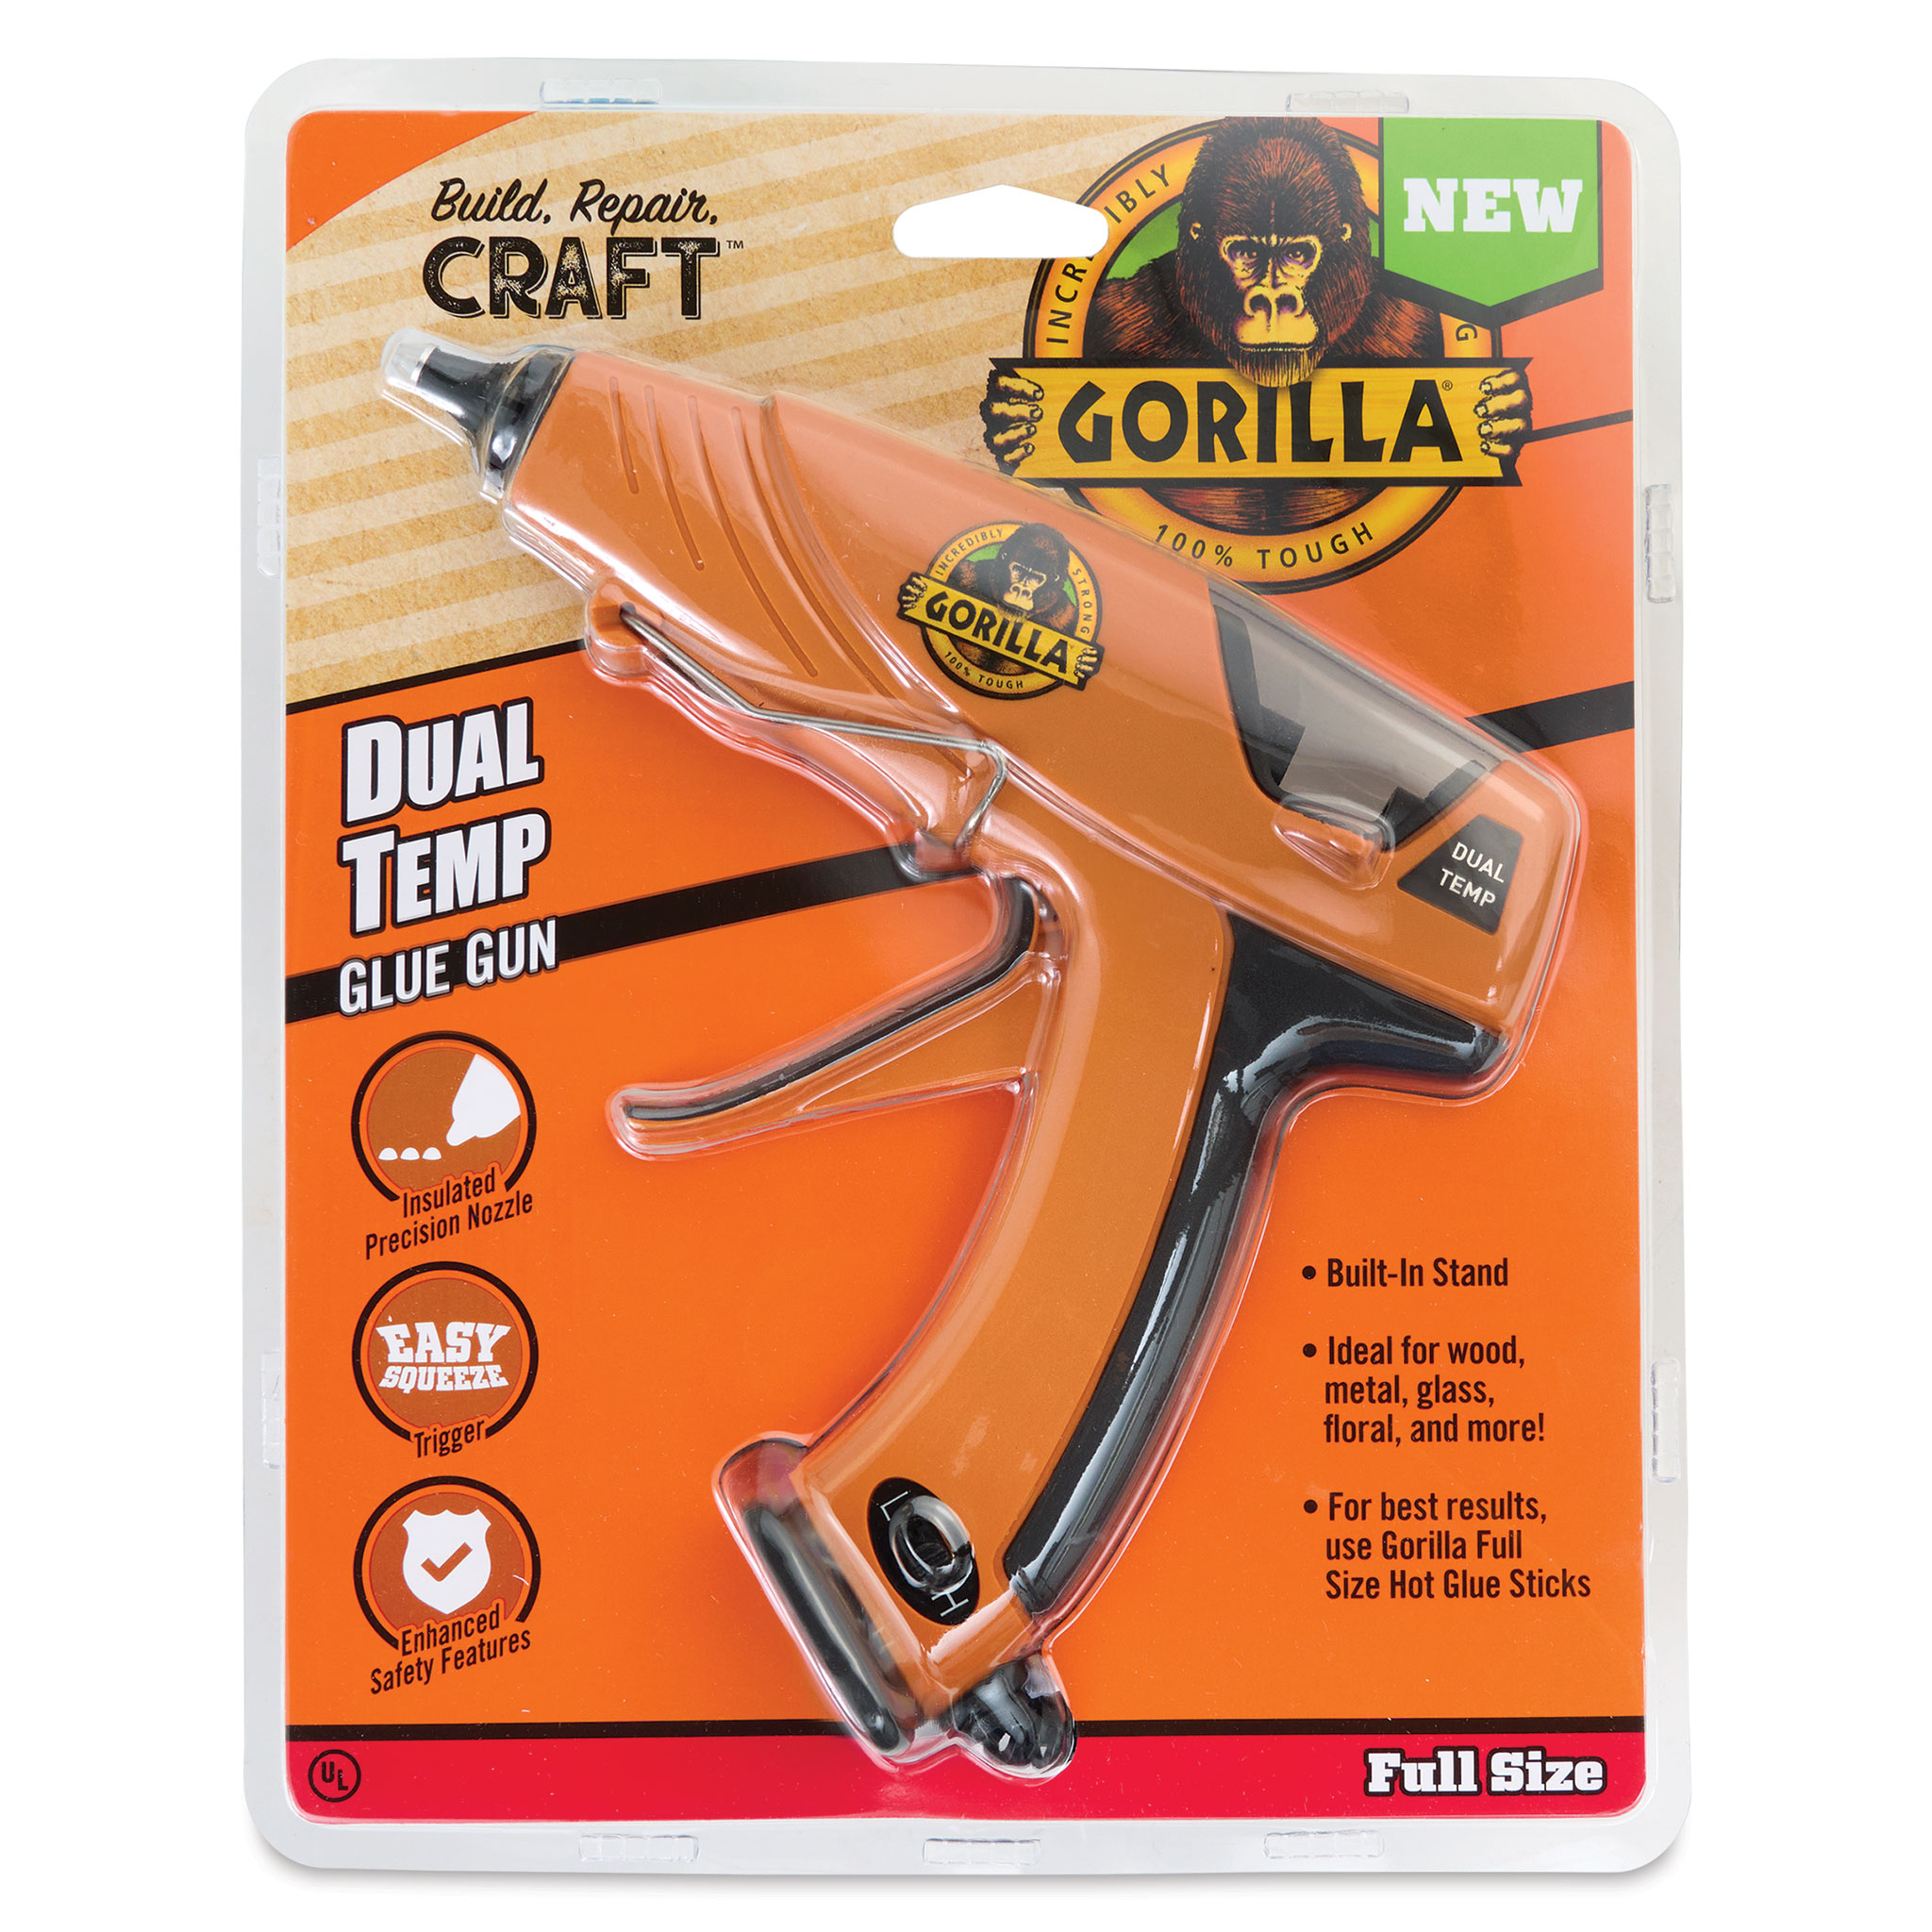 NEW Gorilla Glue Gun Dual Temp Built In Stand